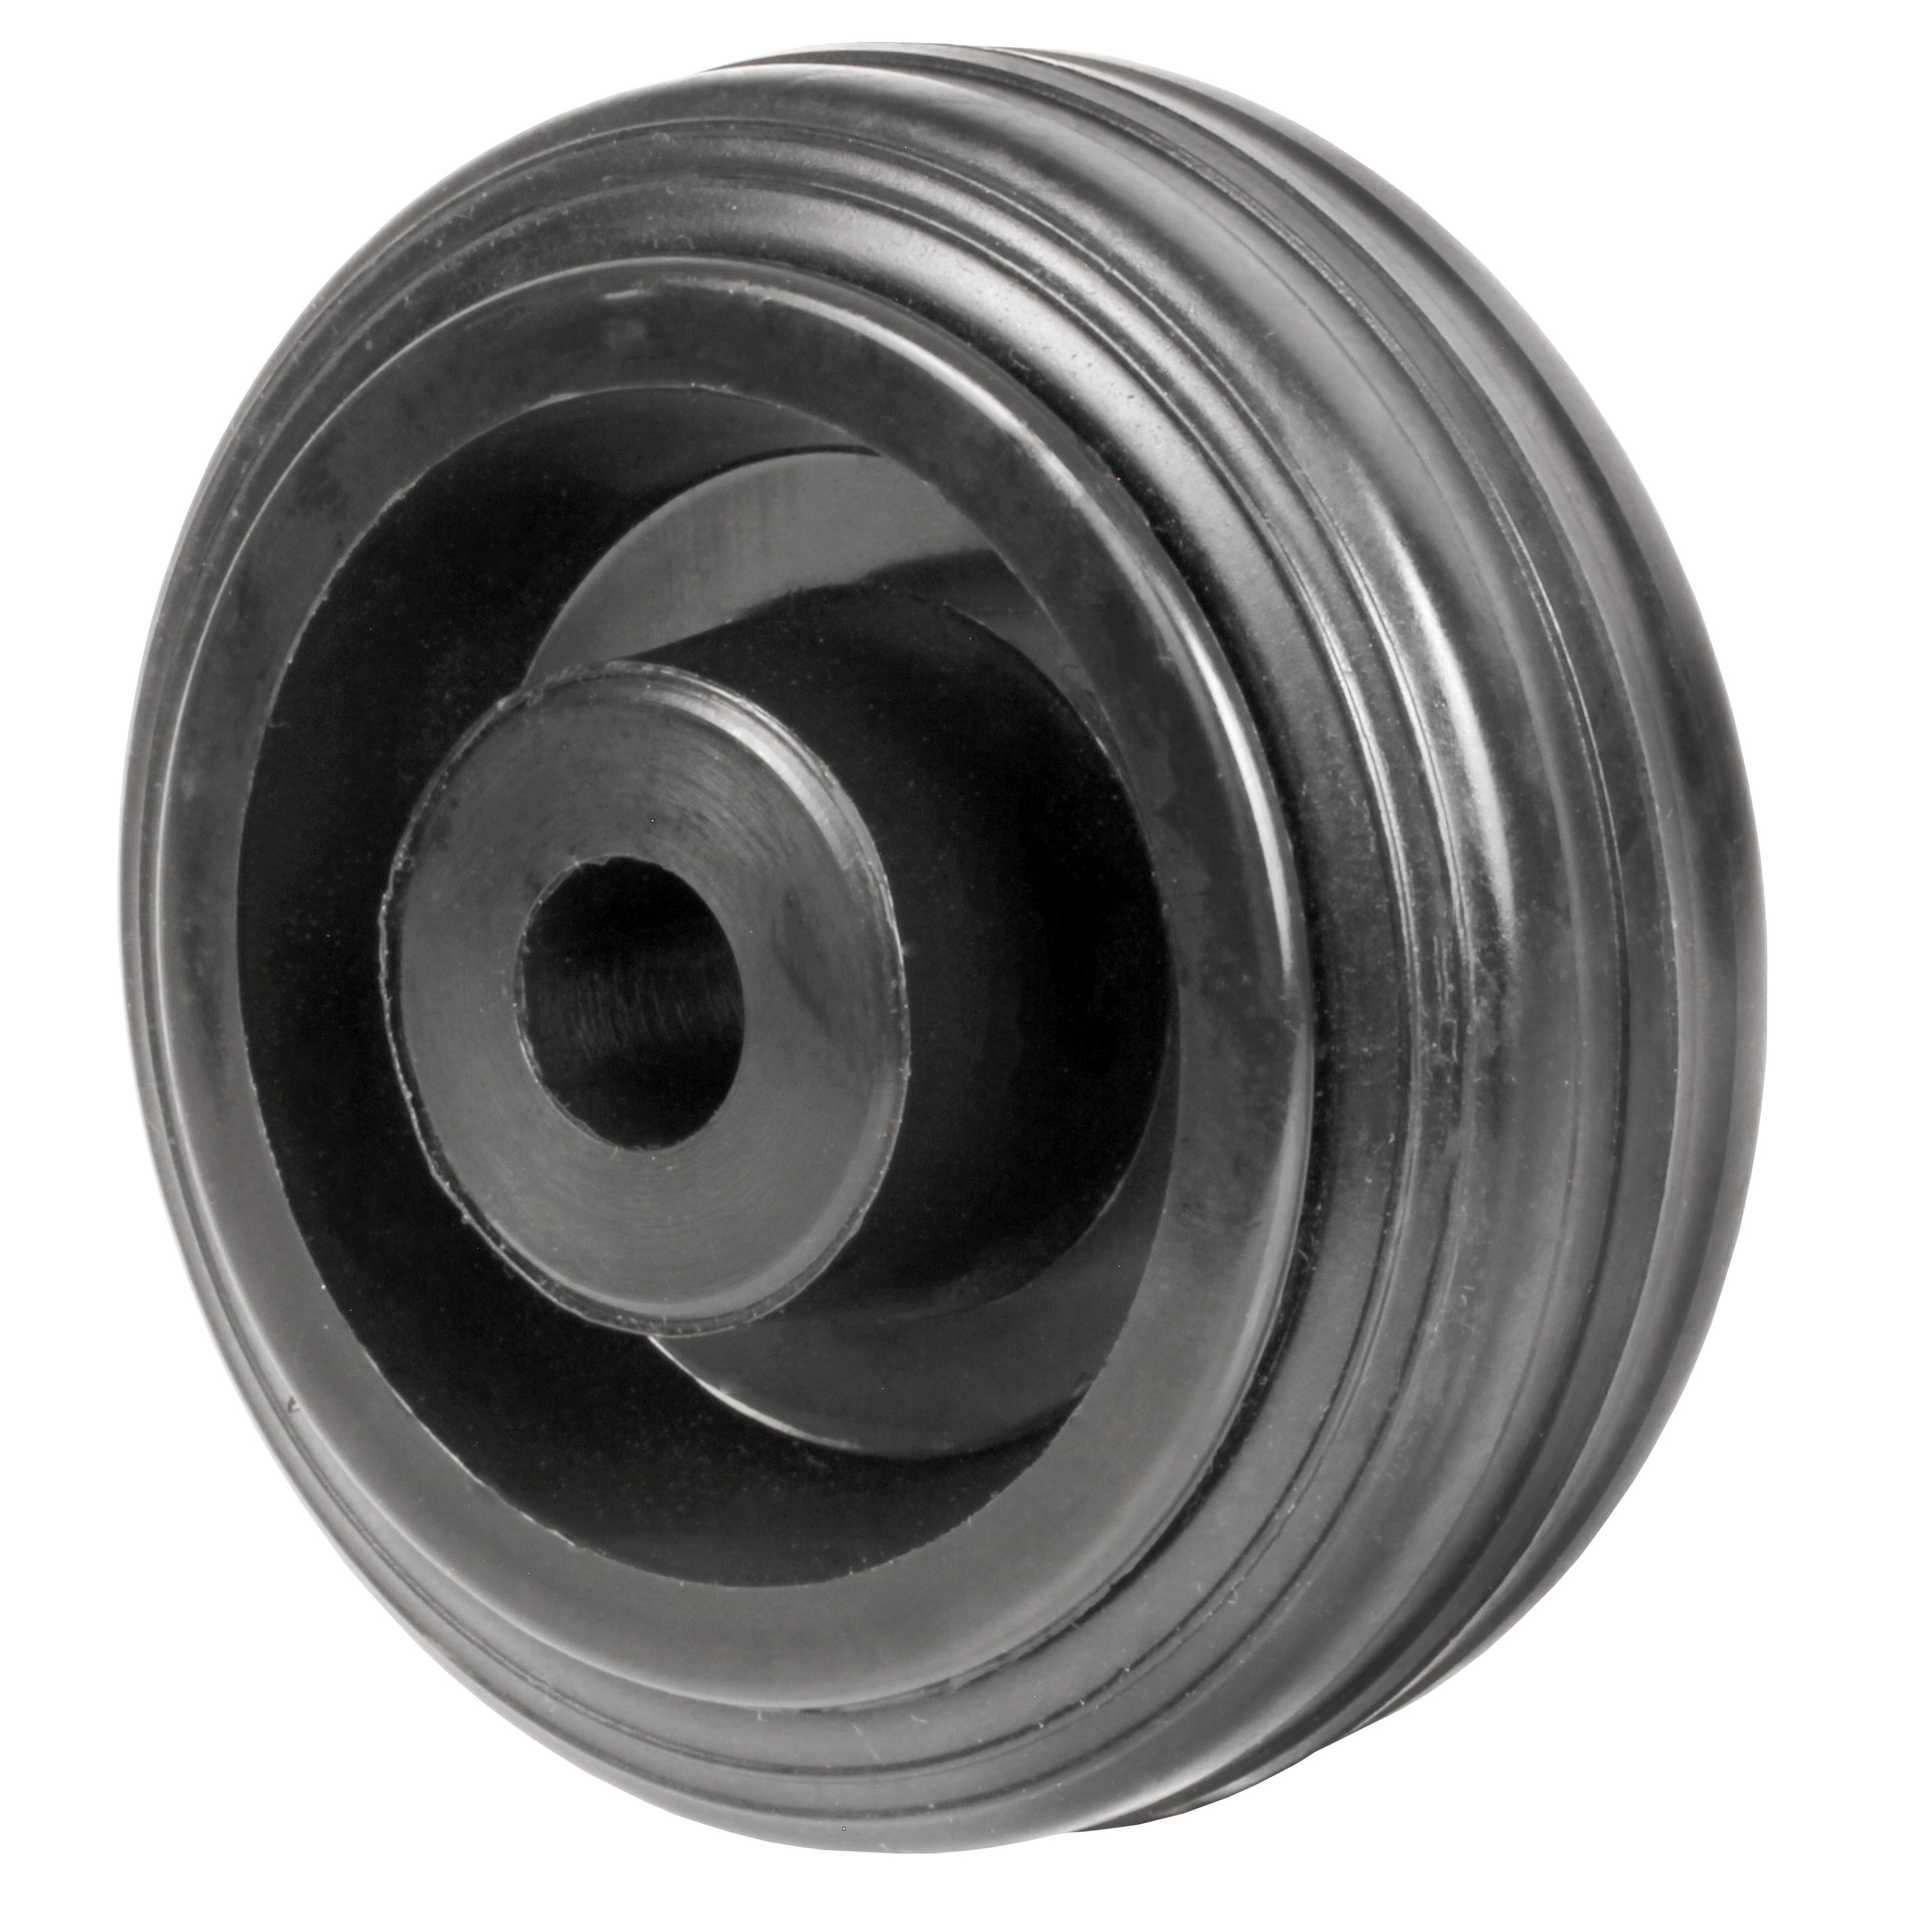 Wheel - Rubber tyre - Polypropylene rim - For loads up to 215Kg - 